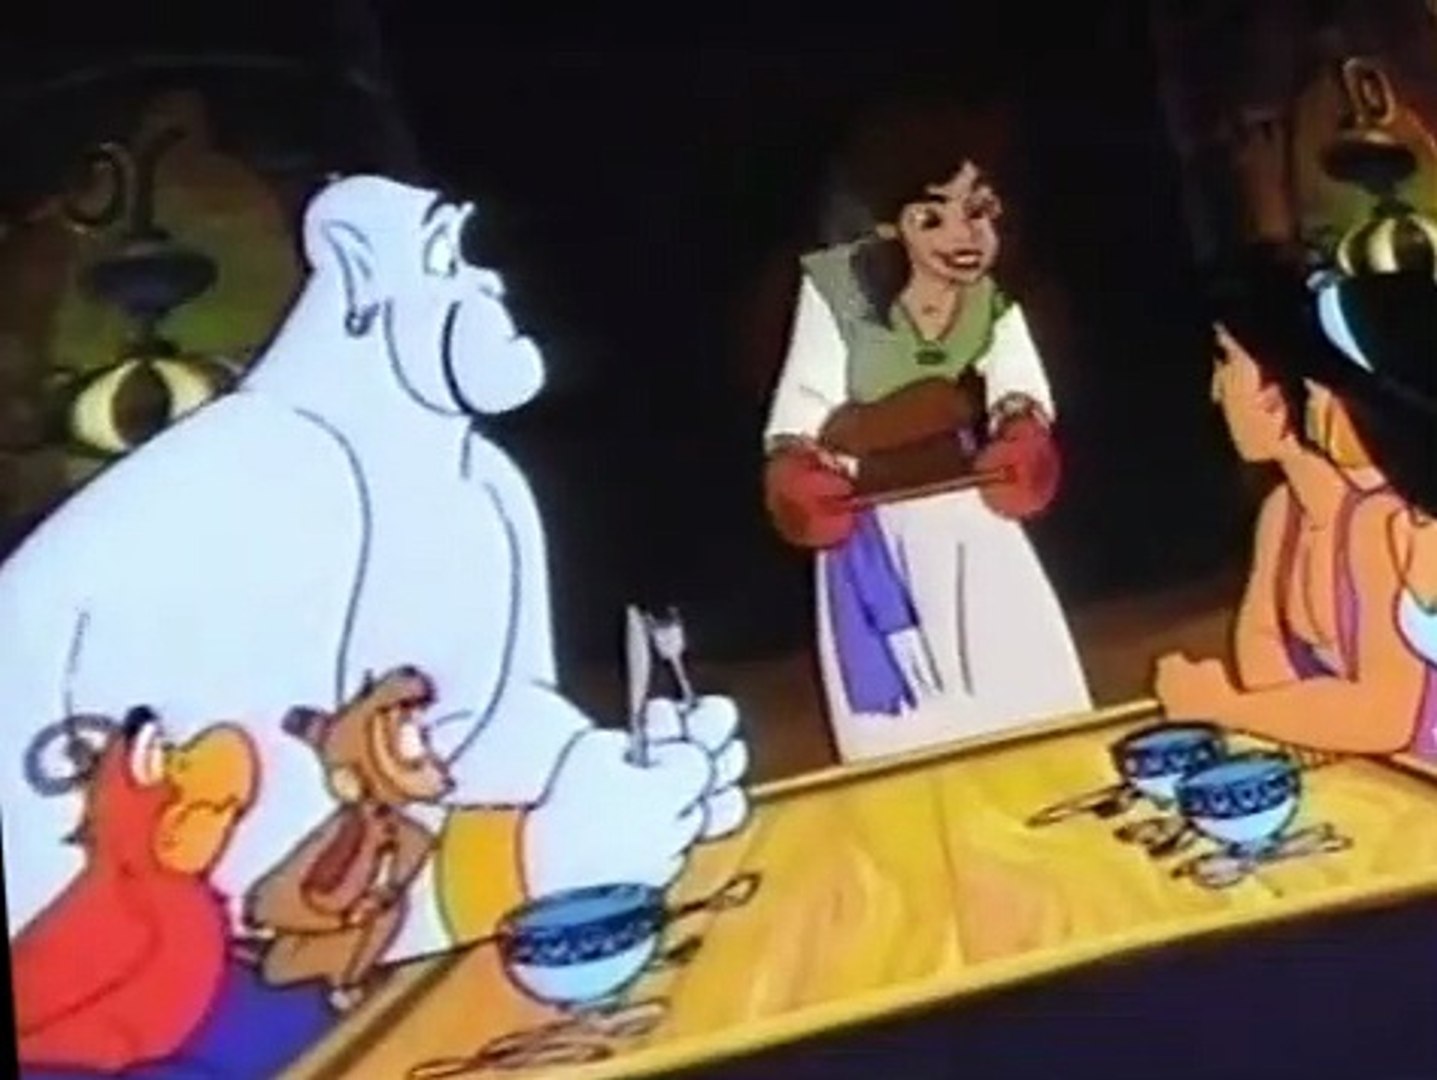 Aladdin Aladdin S02 E008 Witch Way Did She Go? - video Dailymotion